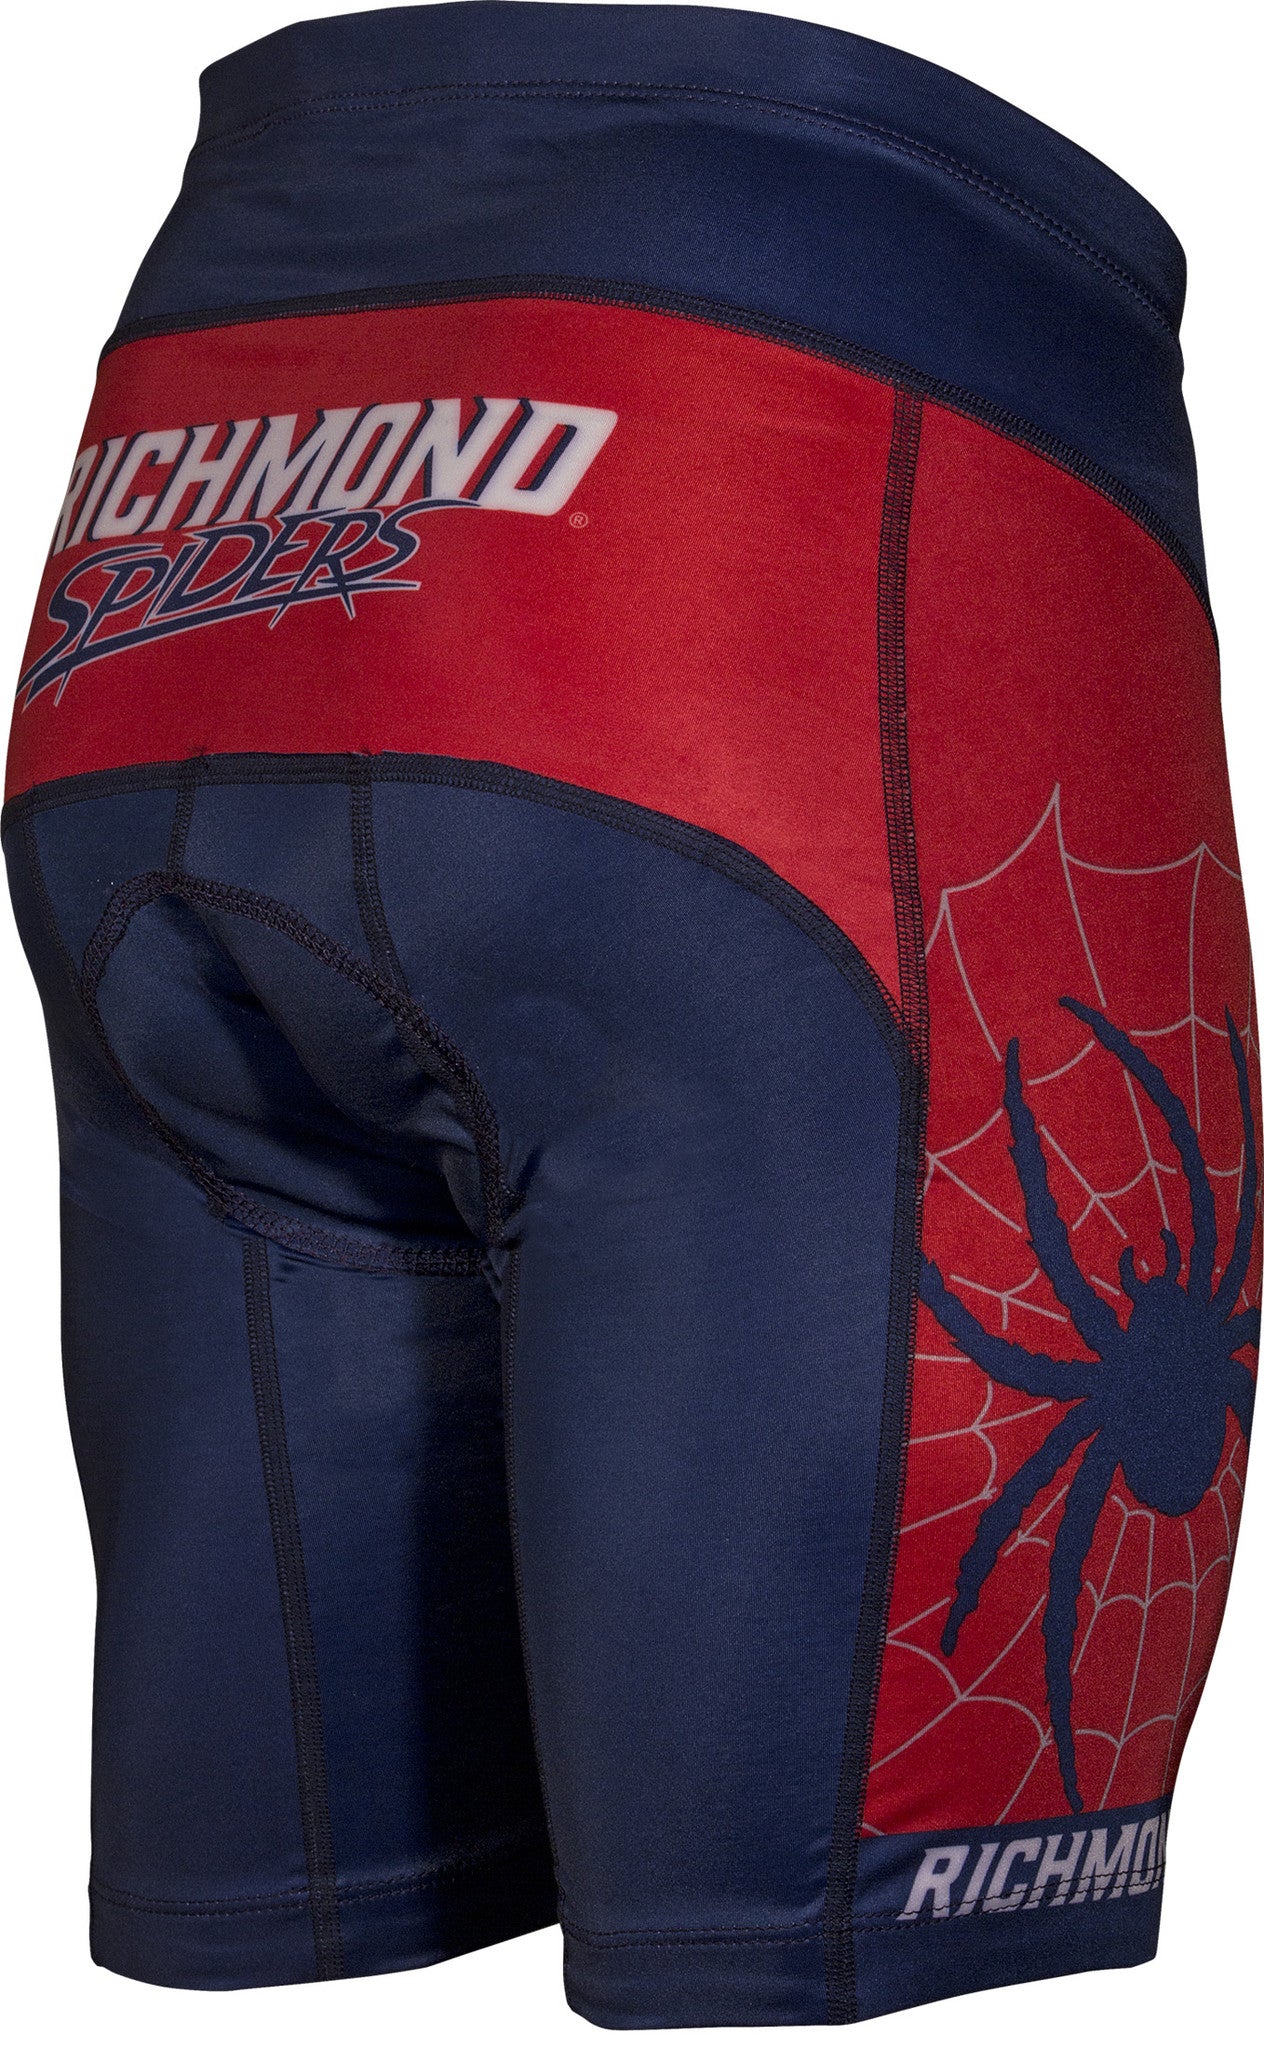 Richmond Spiders Men's Cycling Shorts (S, M, 2XL)